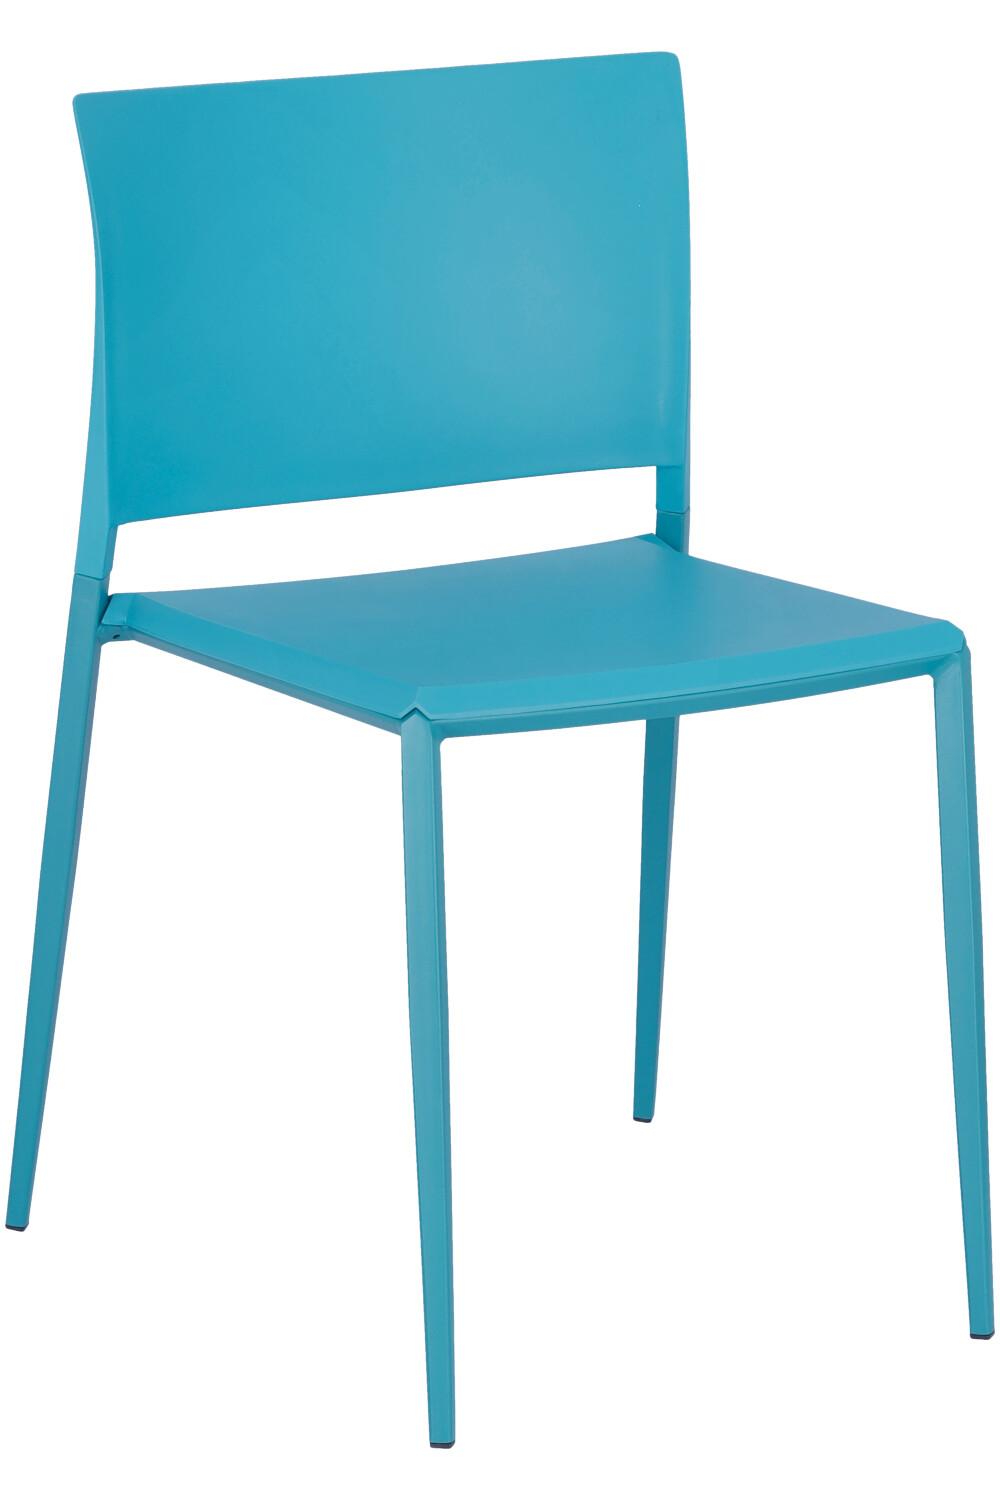 chair Barlin